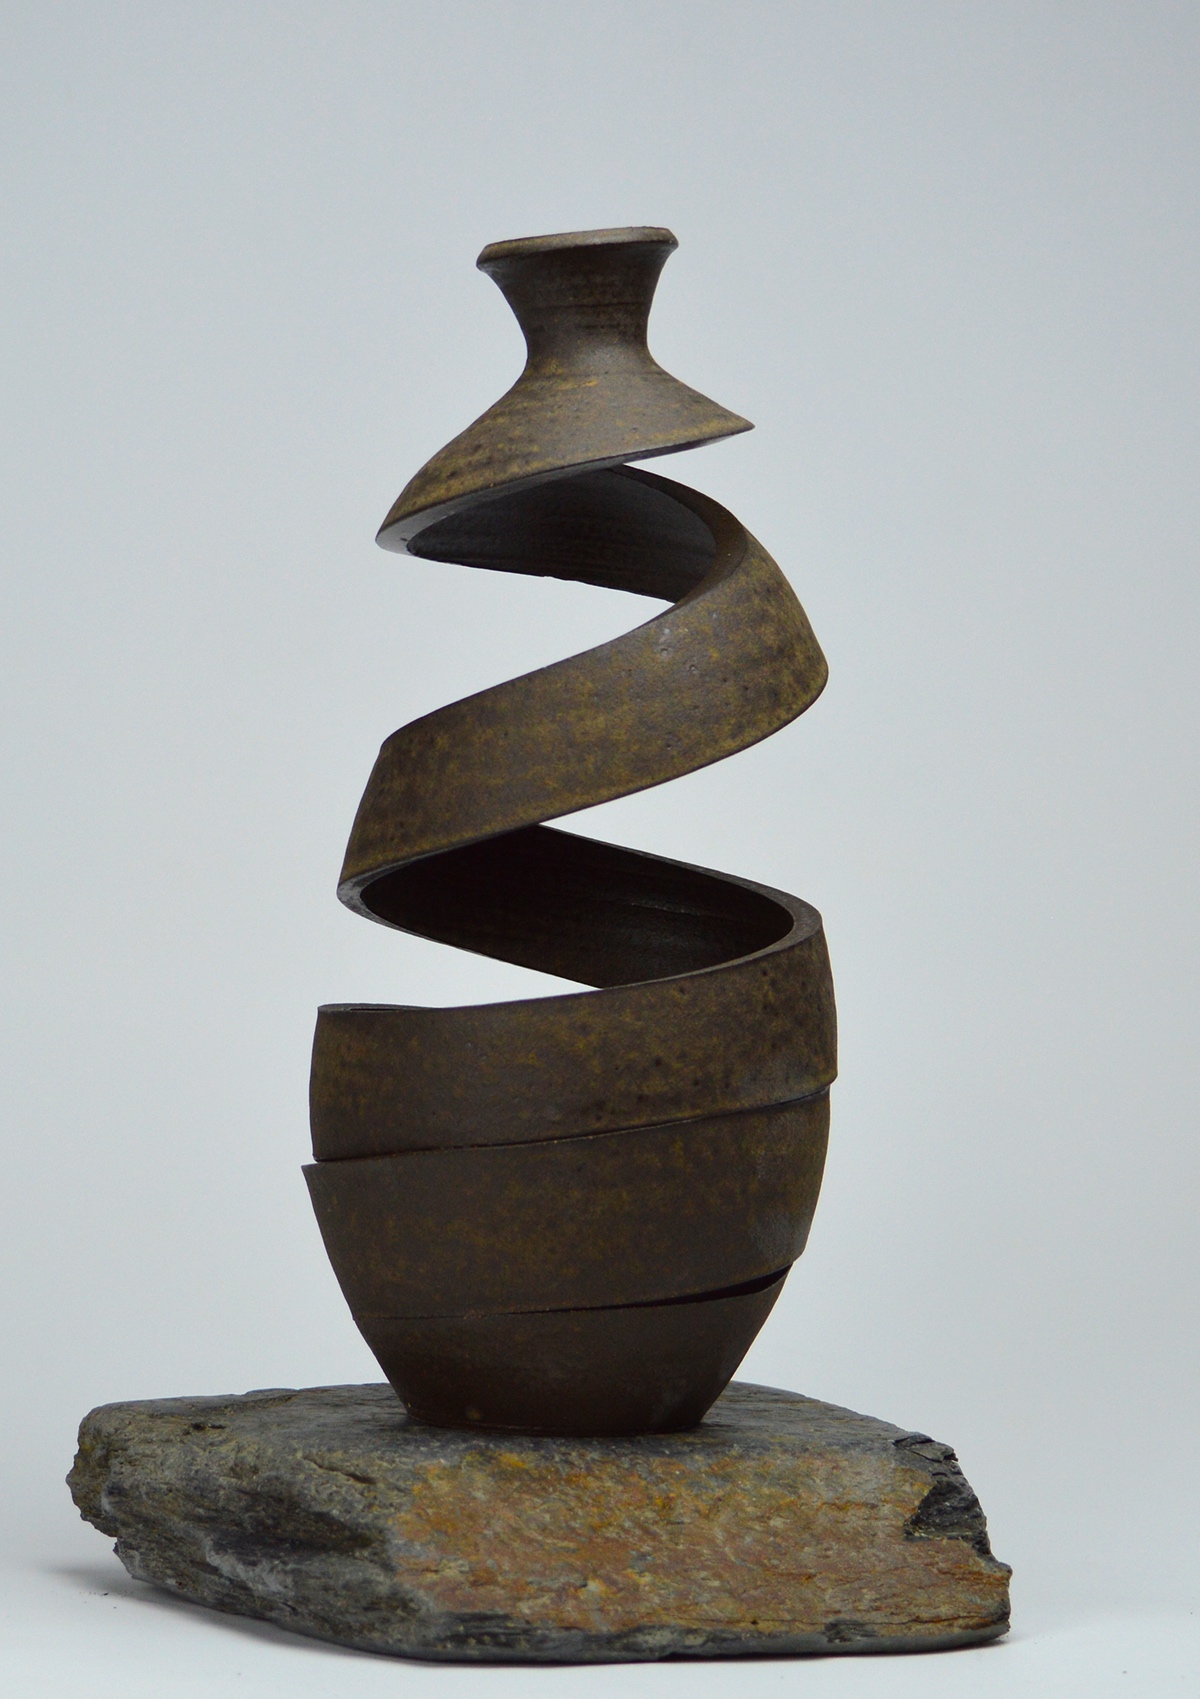 Adobe Portfolio Spiral spatial fine art sculpture ceramics  ceramic clay porcelain object contemporary ceramist earthenware decorative Boroniec